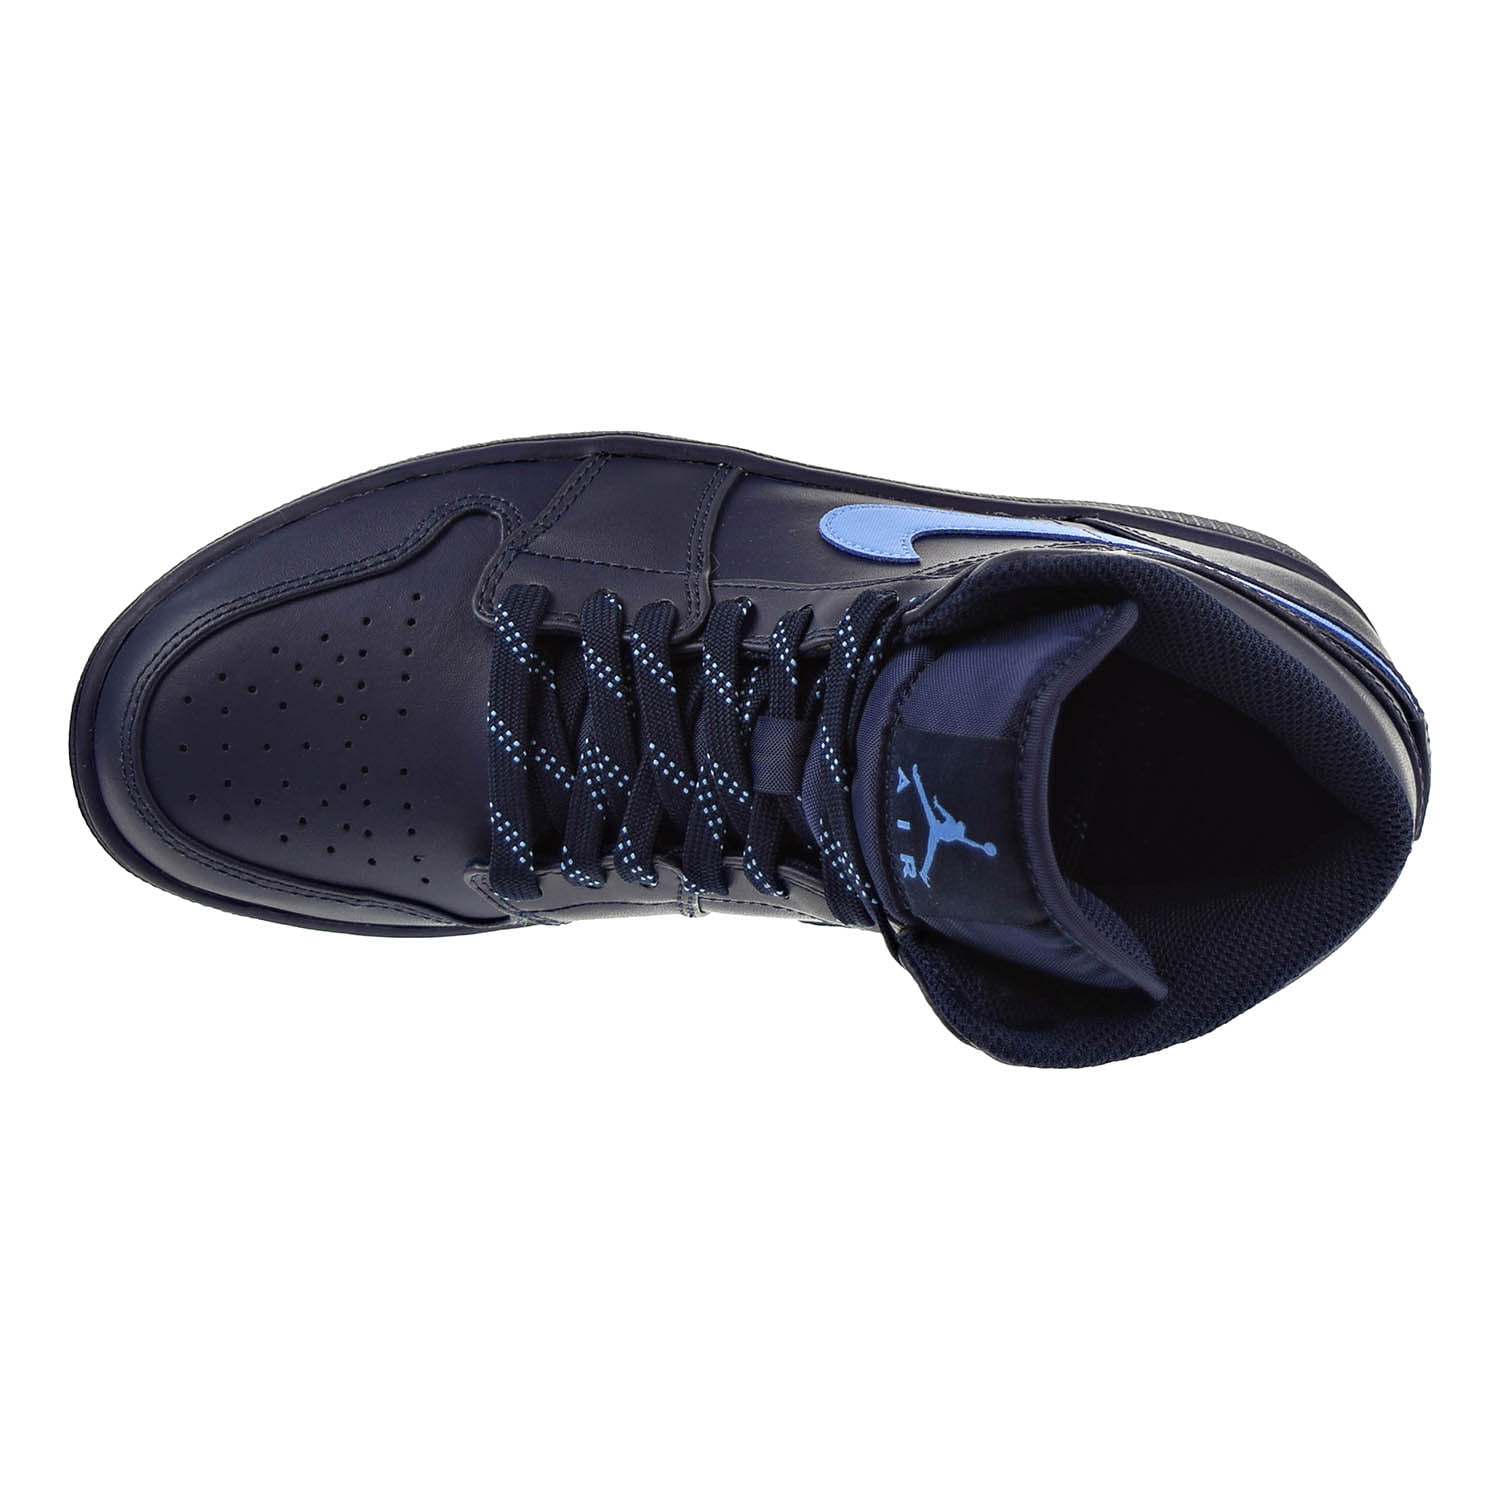 Air Jordan 1 Mid Men's Shoes Obsidian/University Blue-White 554724 